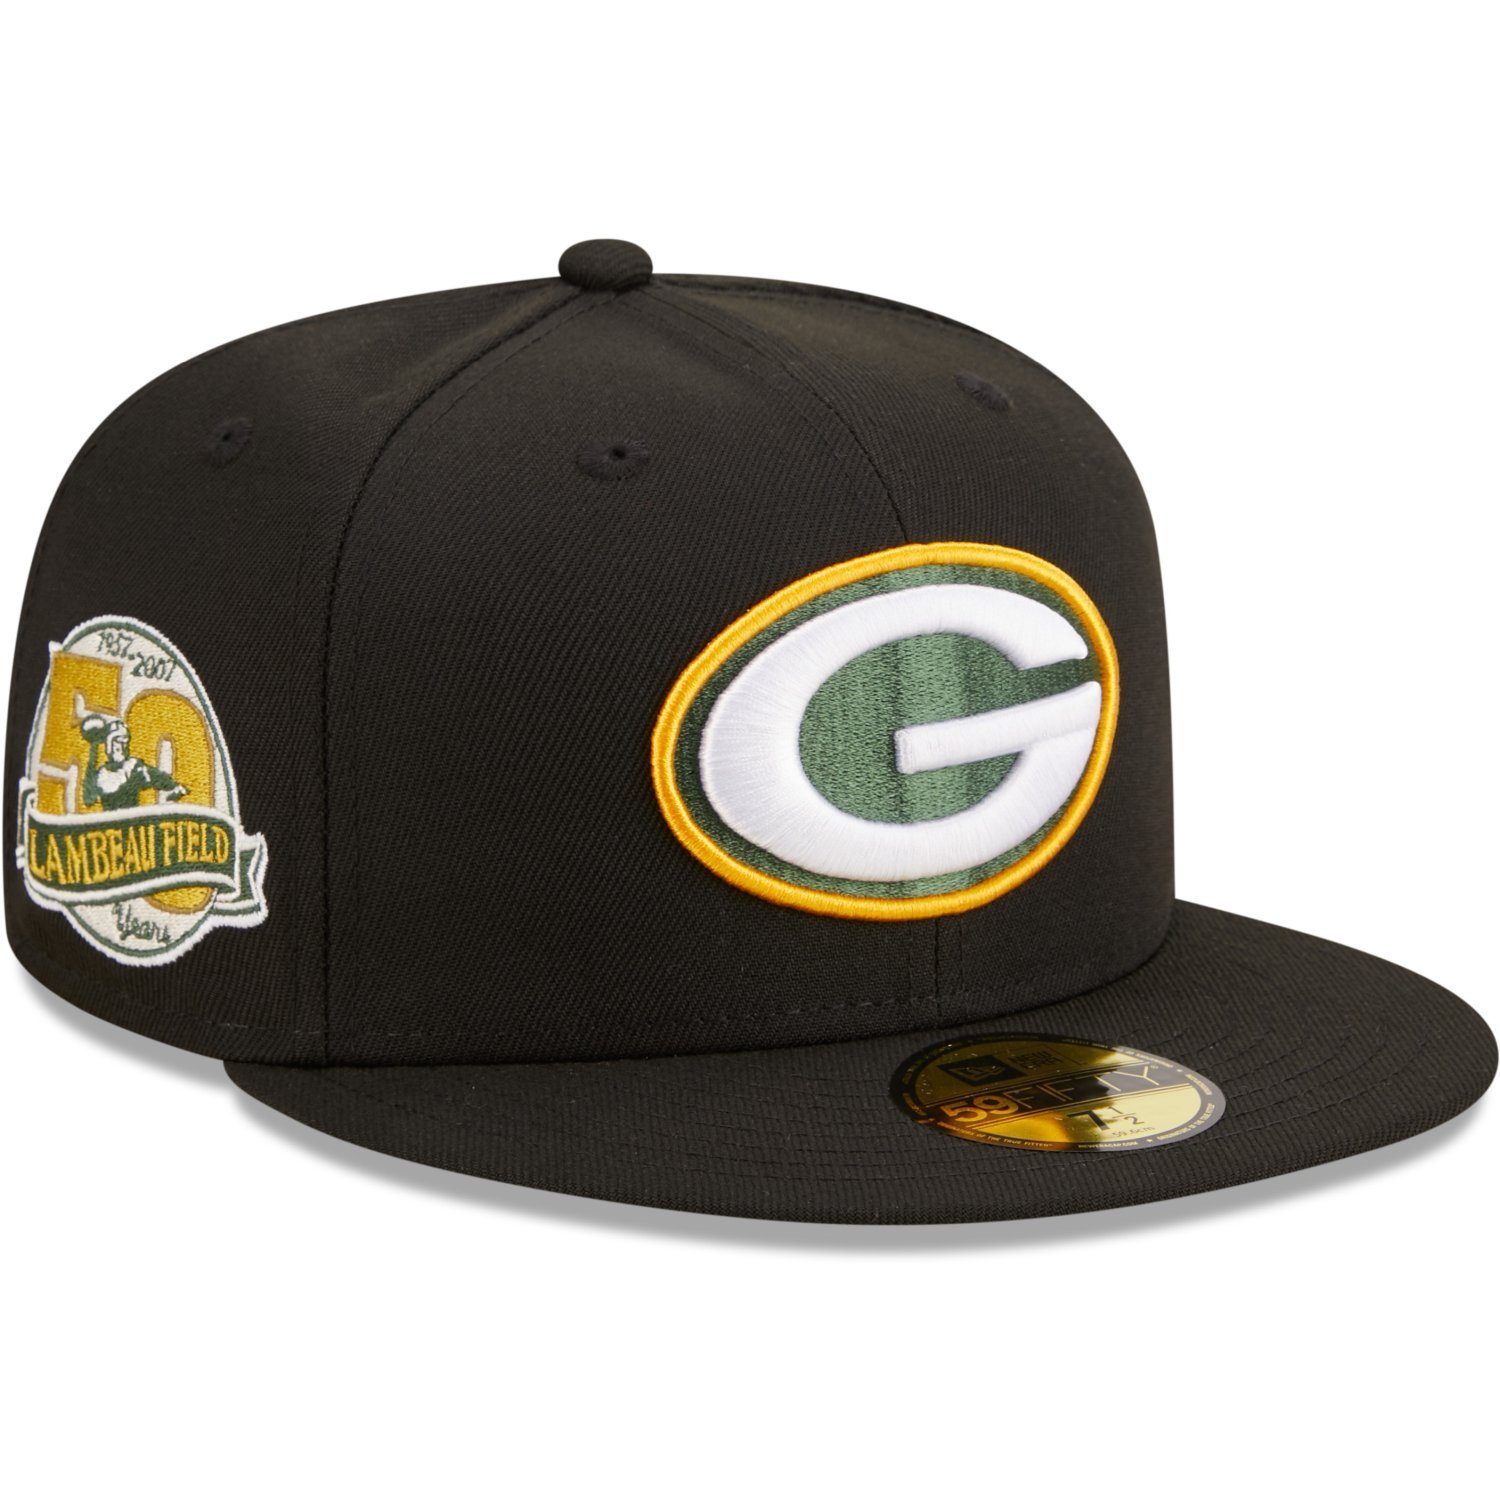 New Era Fitted Cap 59Fifty Green Bay Packers Lambeau Field